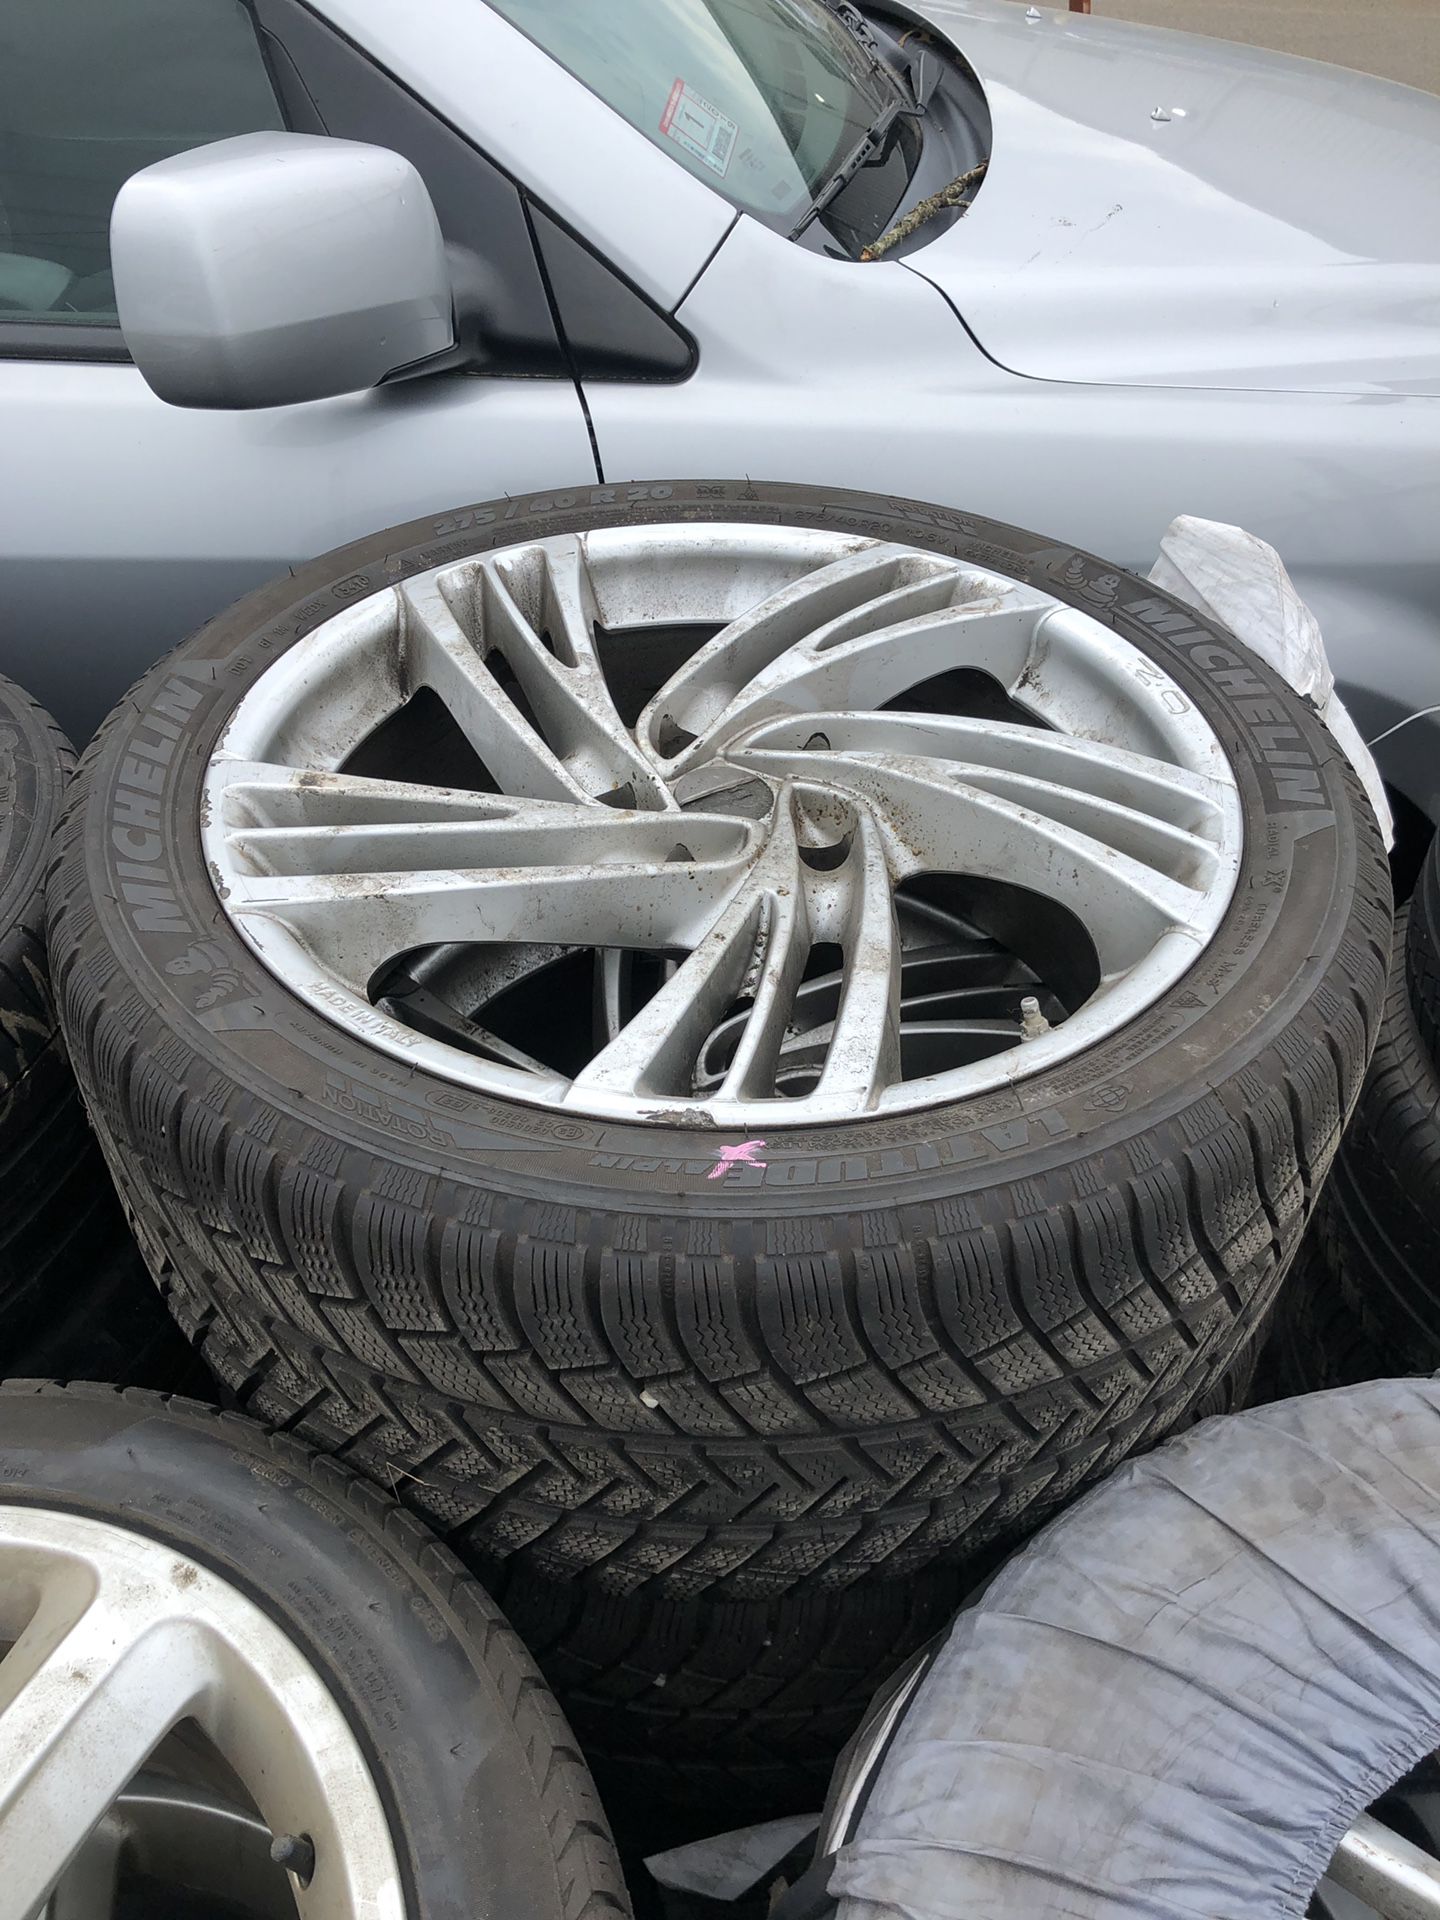 Porsche Cayenne turbo wheels with tires